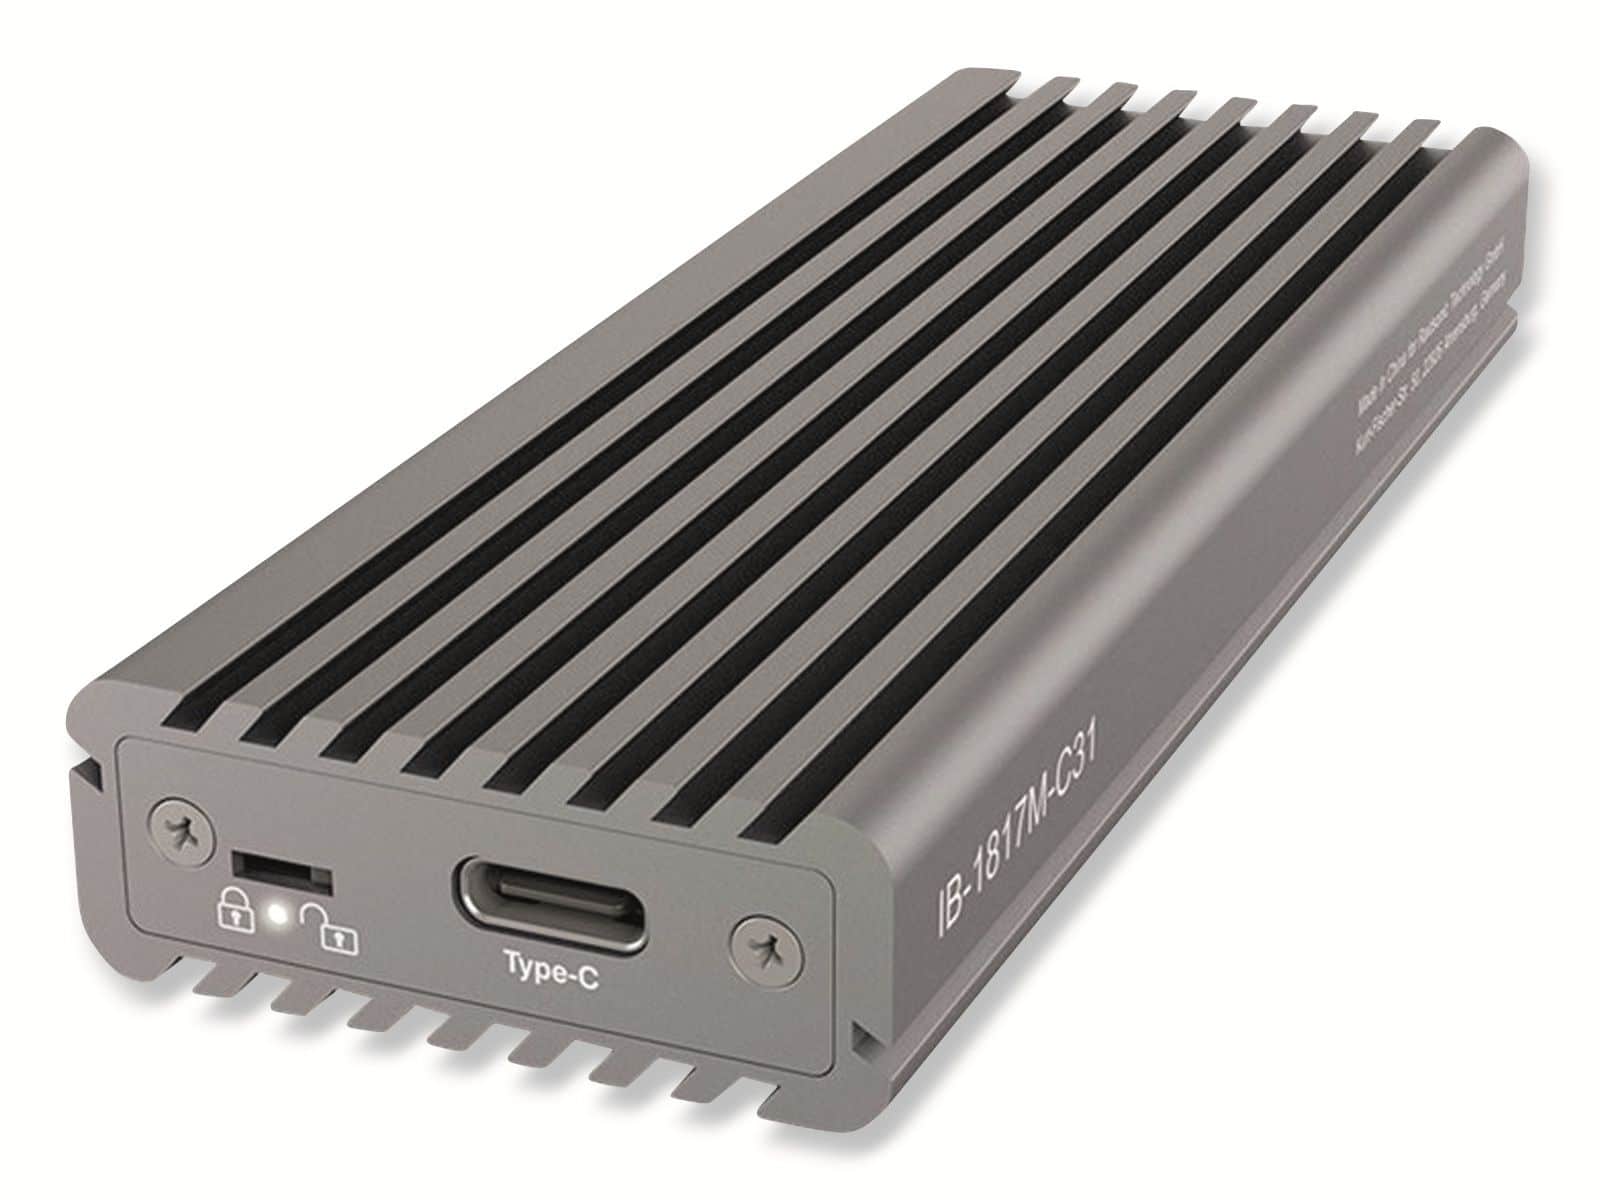 ICY BOX Festplattengehäuse IB-1817M-C31, M.2 PCIe SSD, USB 3.1 von Icy Box